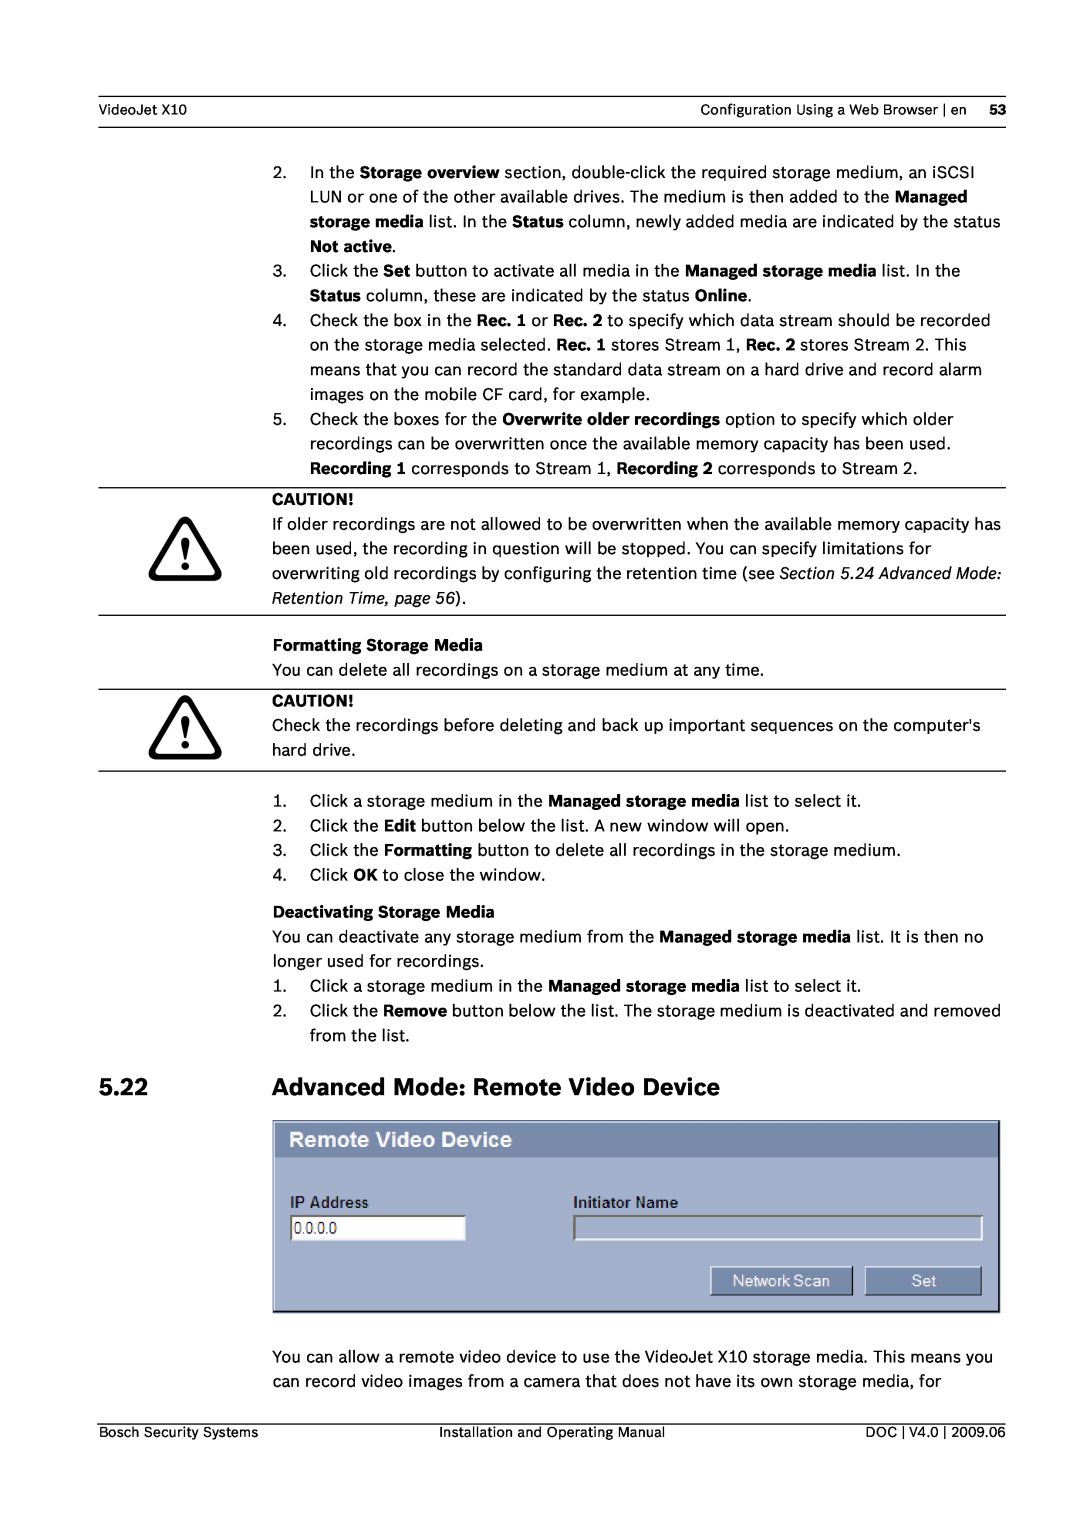 Bosch Appliances X10 manual 5.22, Advanced Mode Remote Video Device, Formatting Storage Media, Deactivating Storage Media 